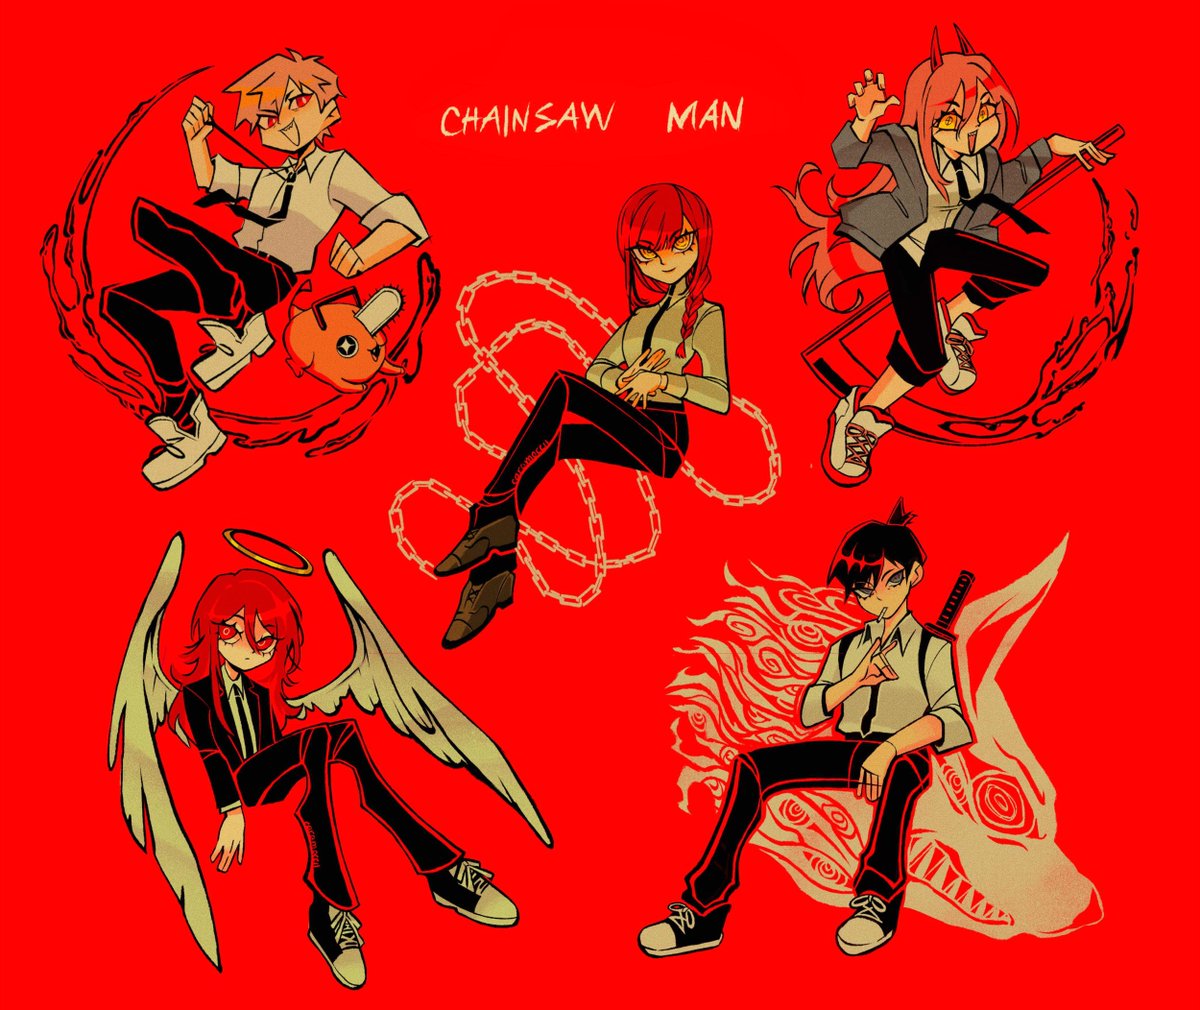 brmbrmmmmmmm...... chainsaw man stickers(?!) for anime expo🩸 #csm #chainsawman